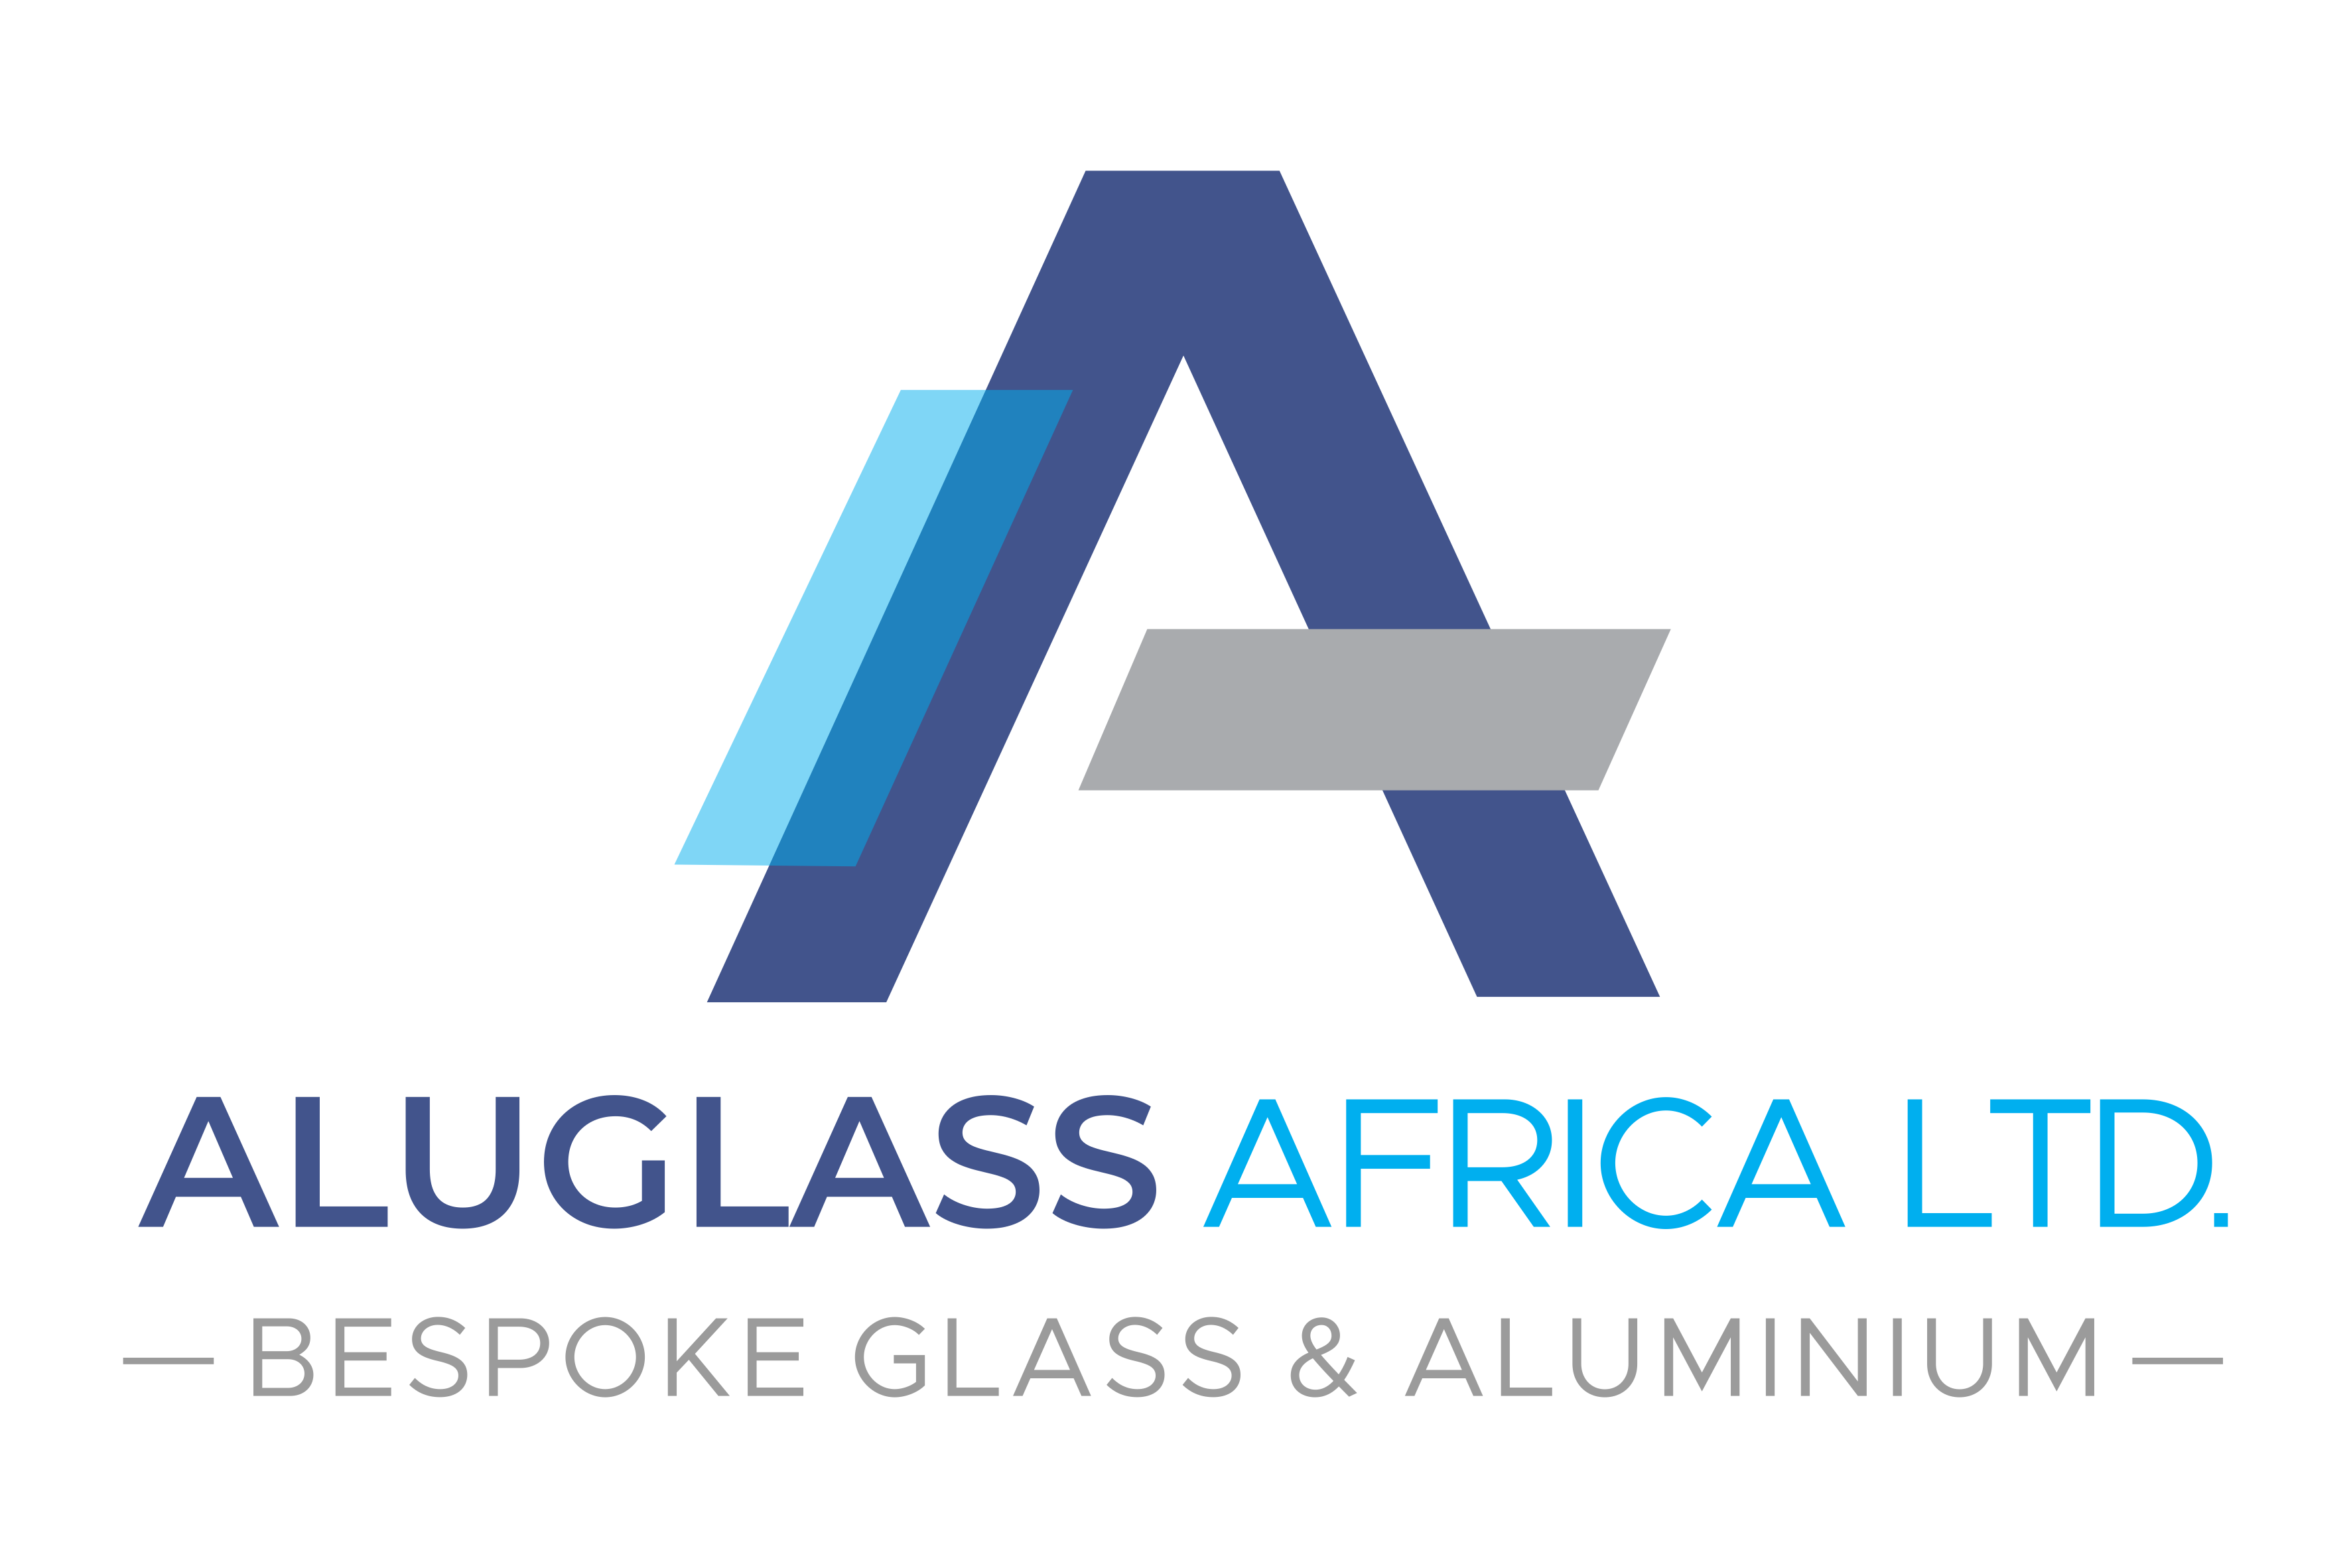 Aluglass Africa Ltd